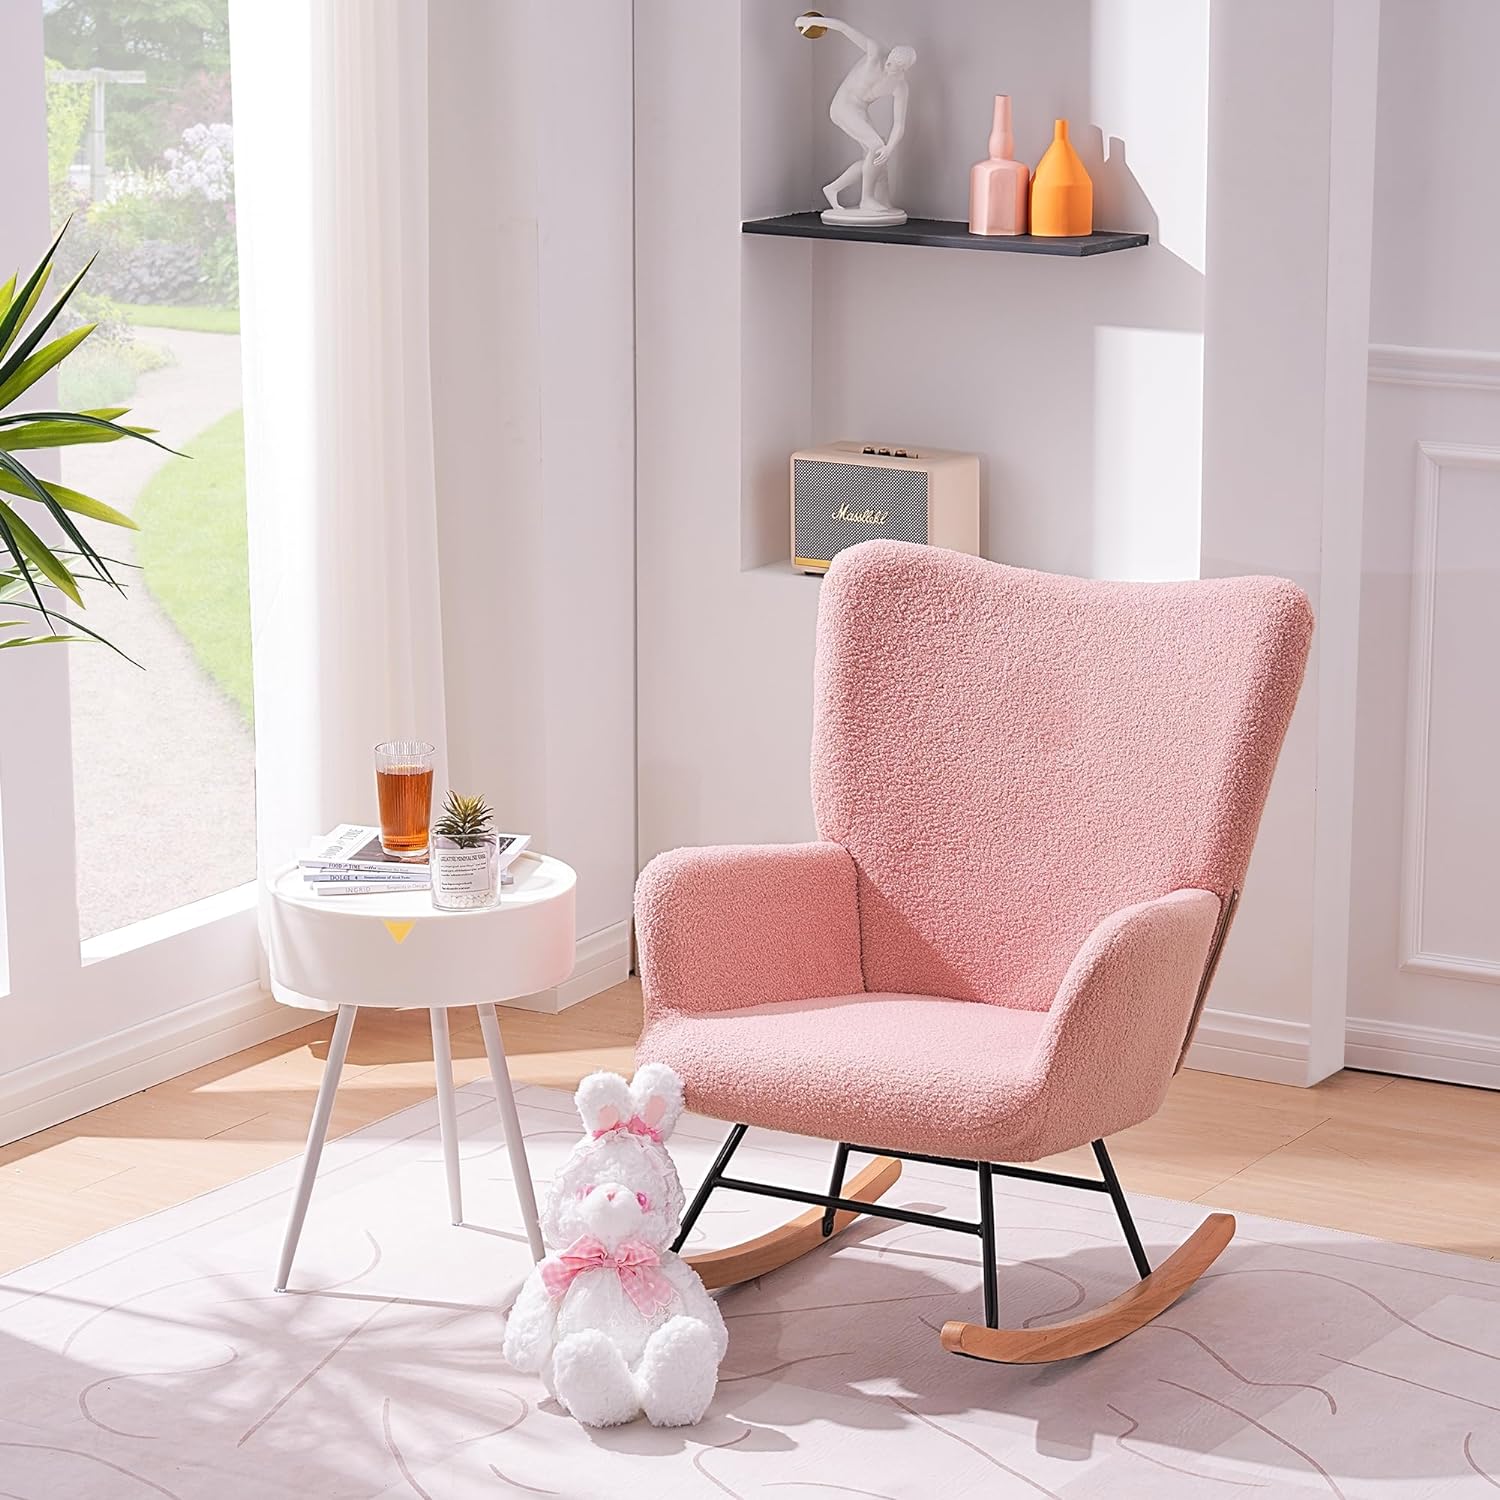 VECELO Rocking Chair, Modern Upholstered Teddy Fabric Nursery Glider